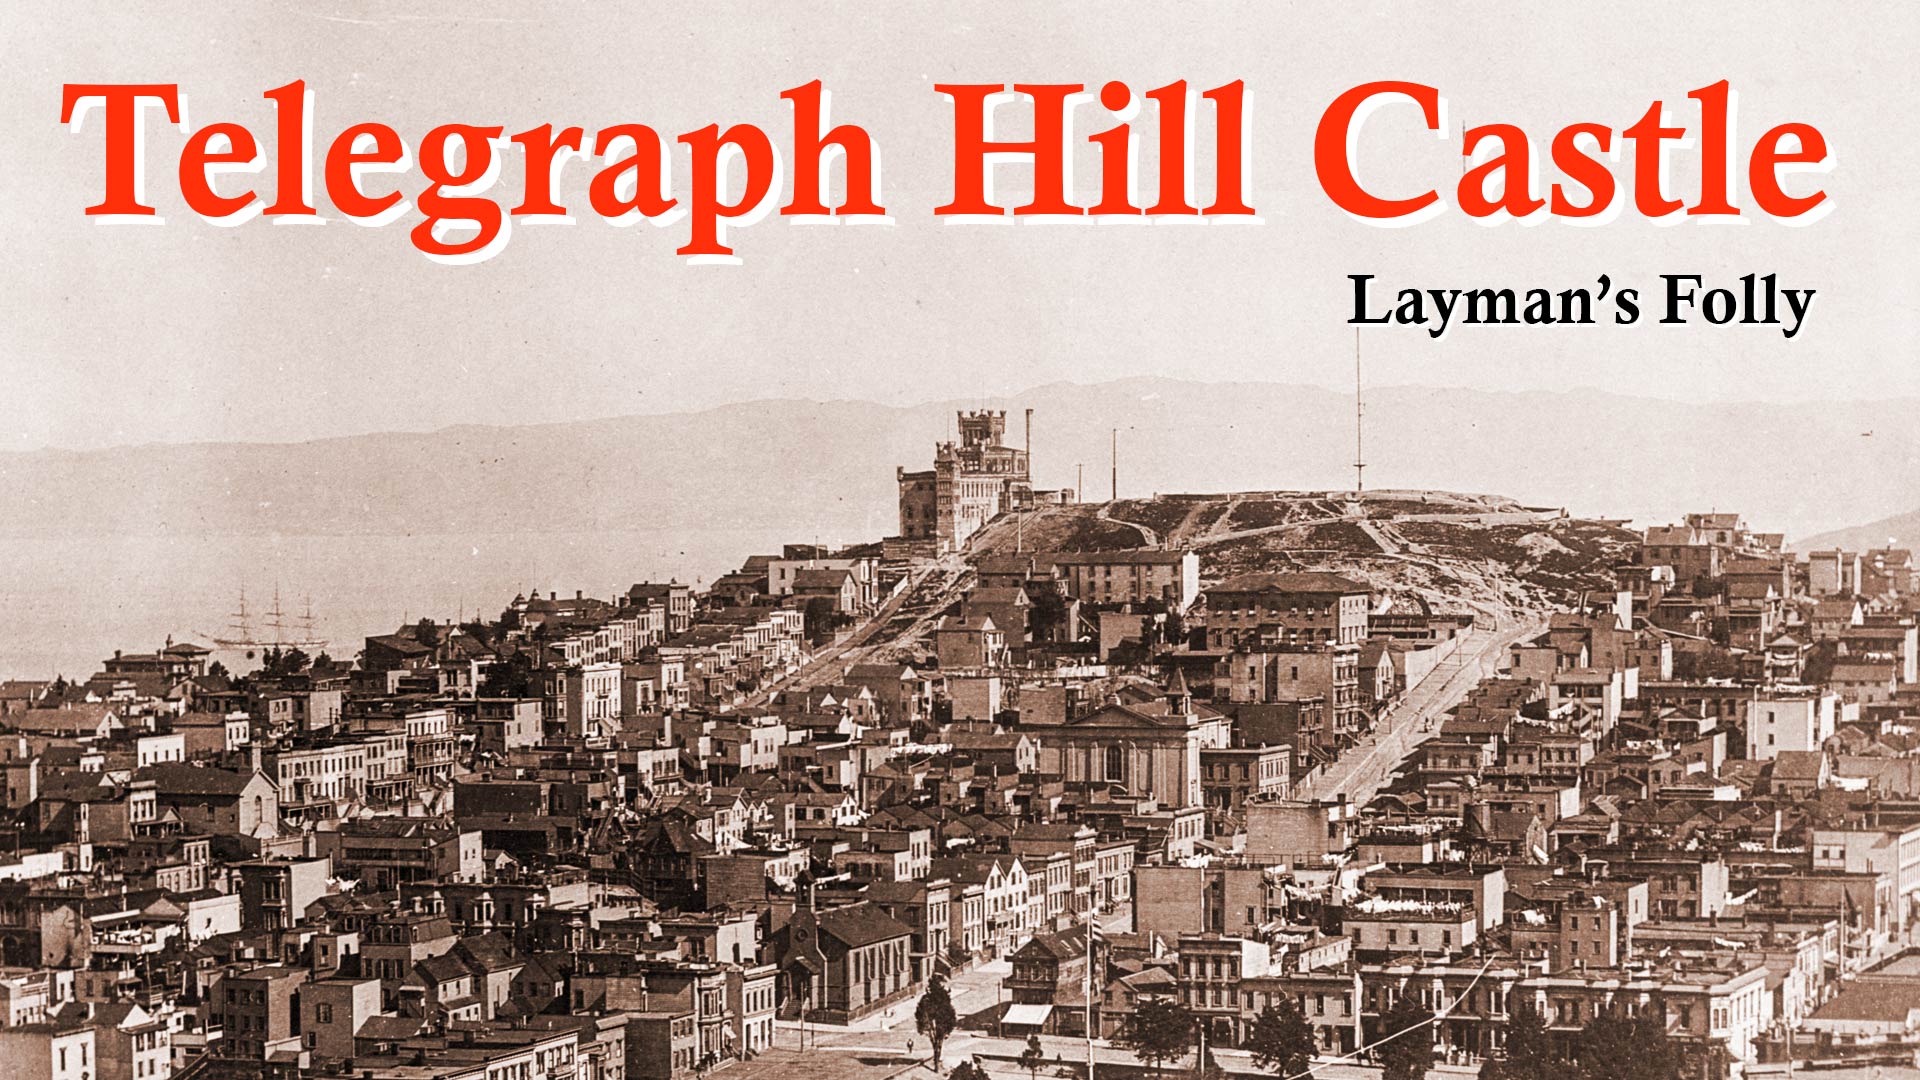 Telegraph Hill Castle: Layman's Folly